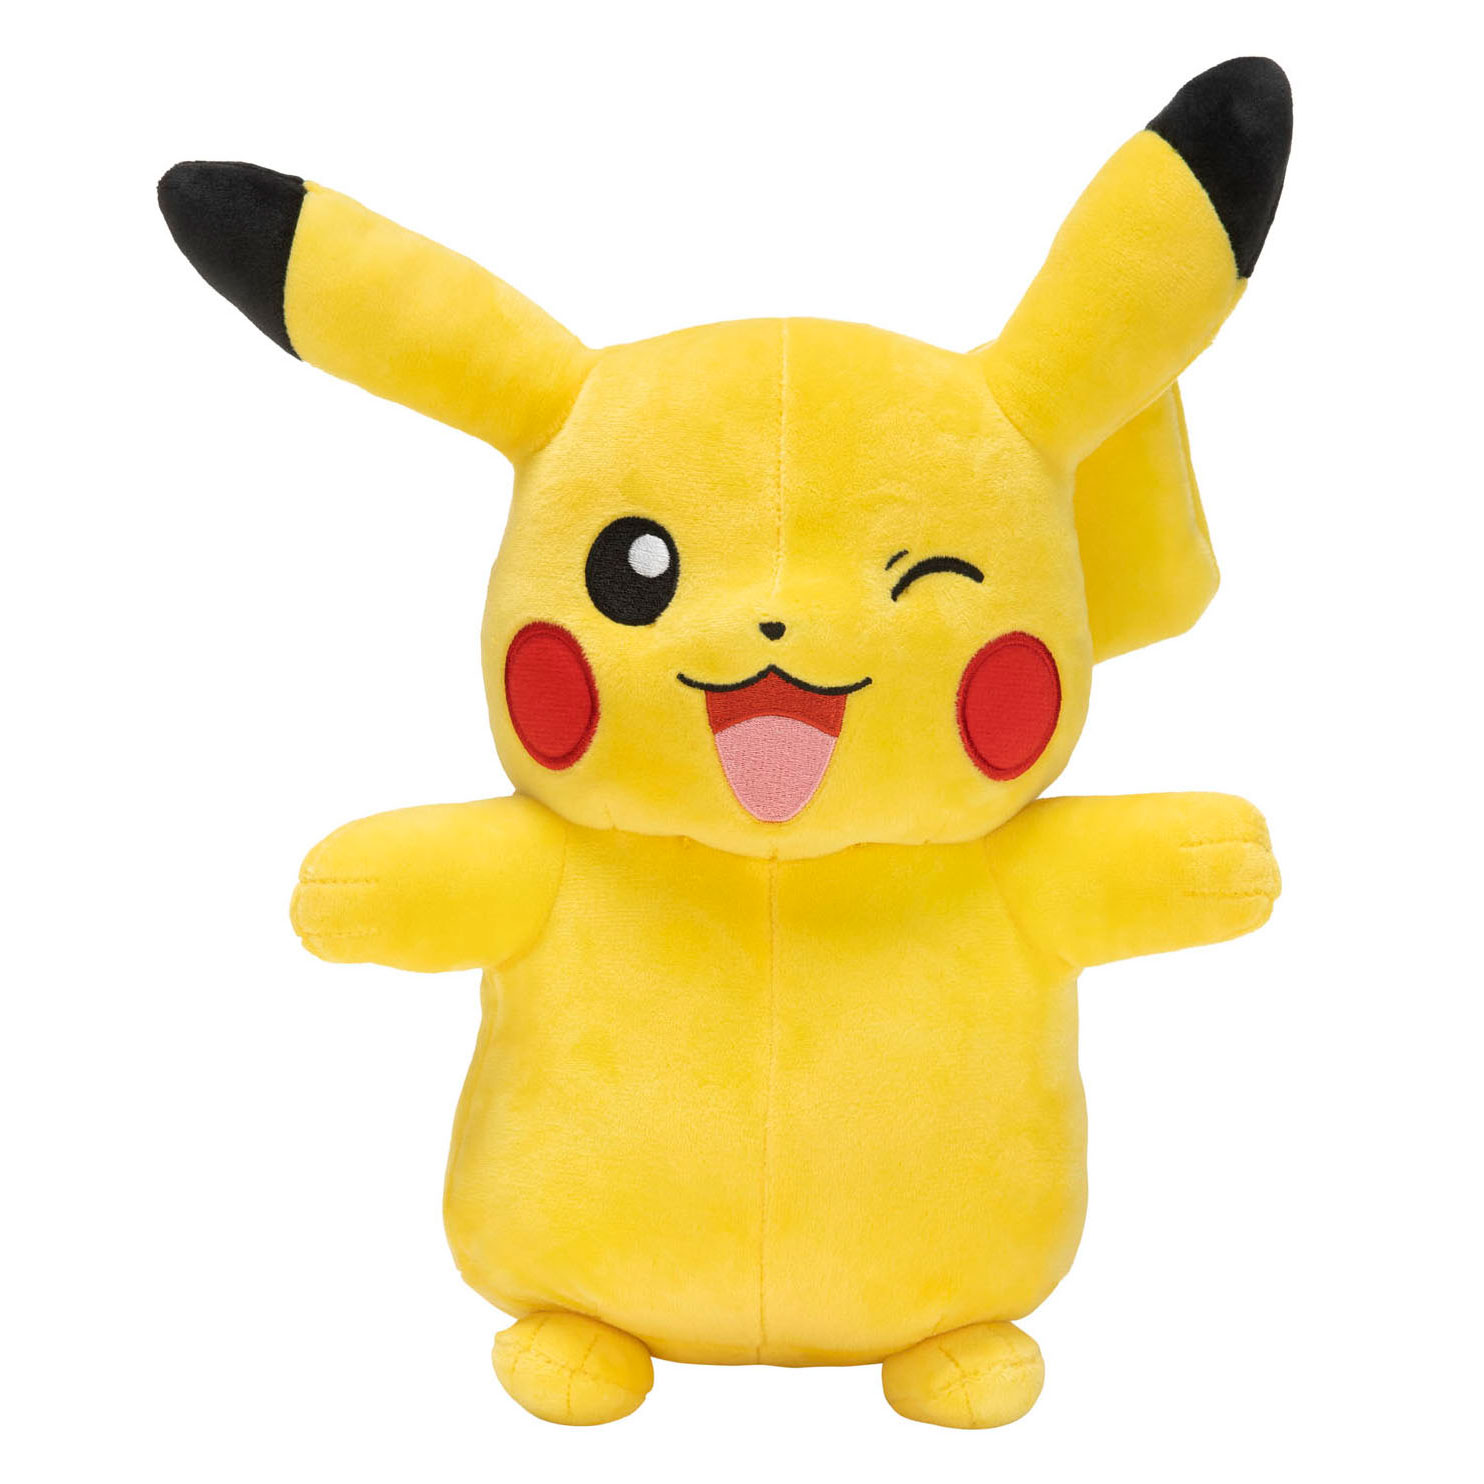 Peluche Pokemon - Pikachu, 30cm